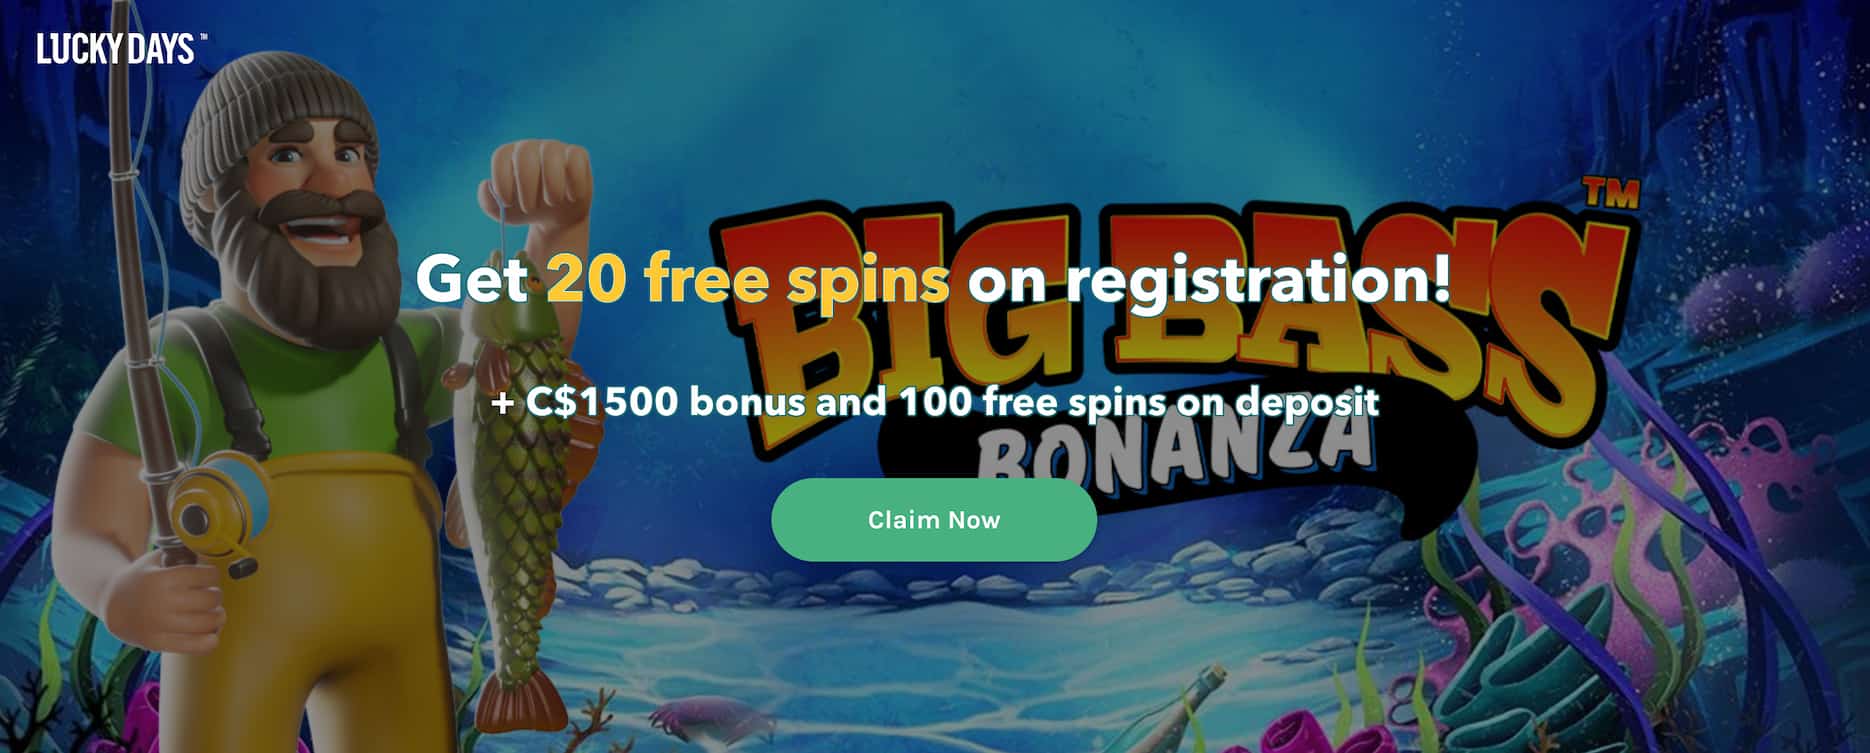 luckydays 20 free spins